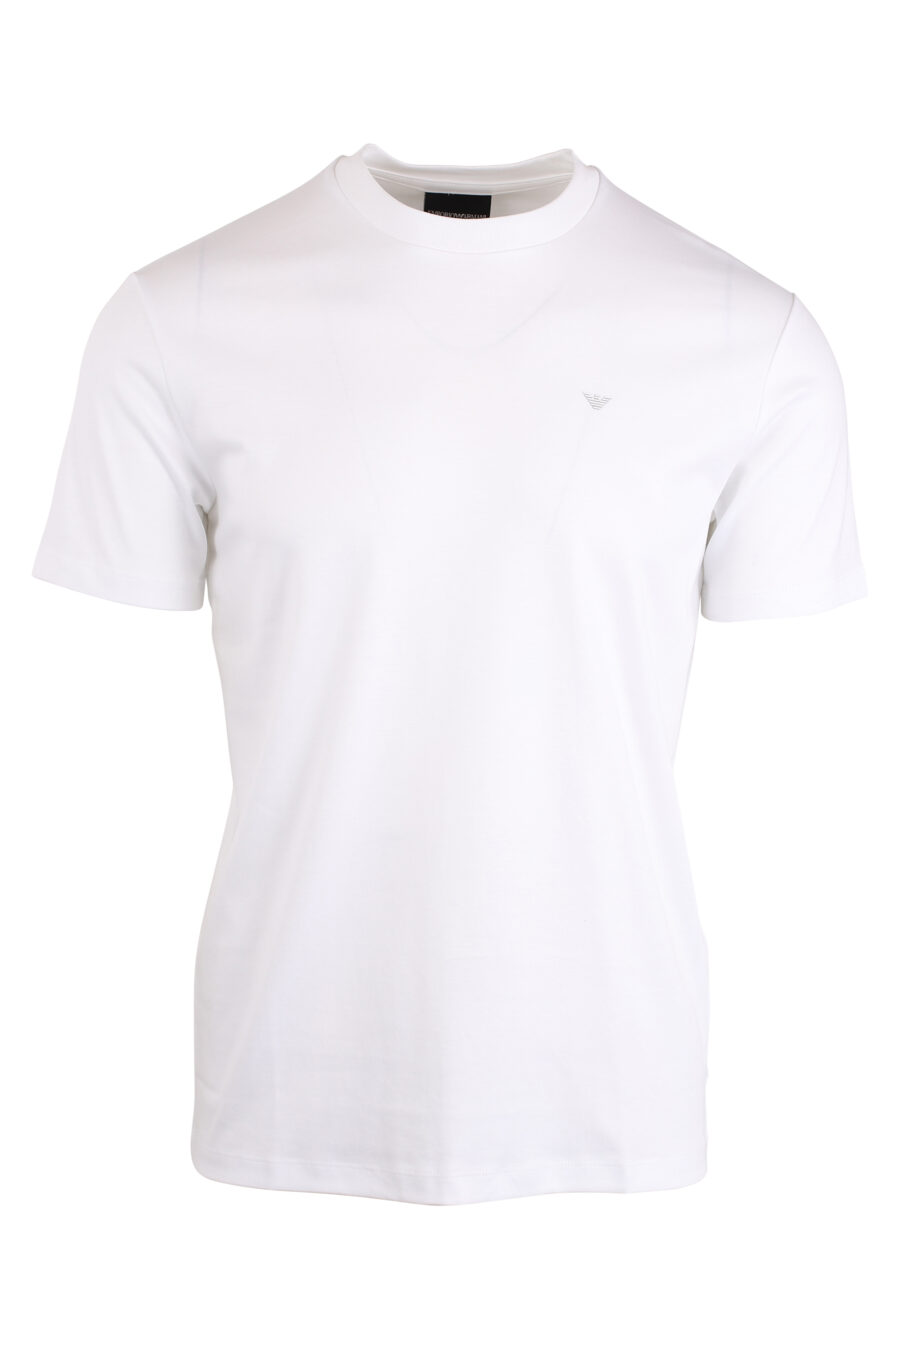 Camiseta blanca con minilogo blanco - IMG 4267